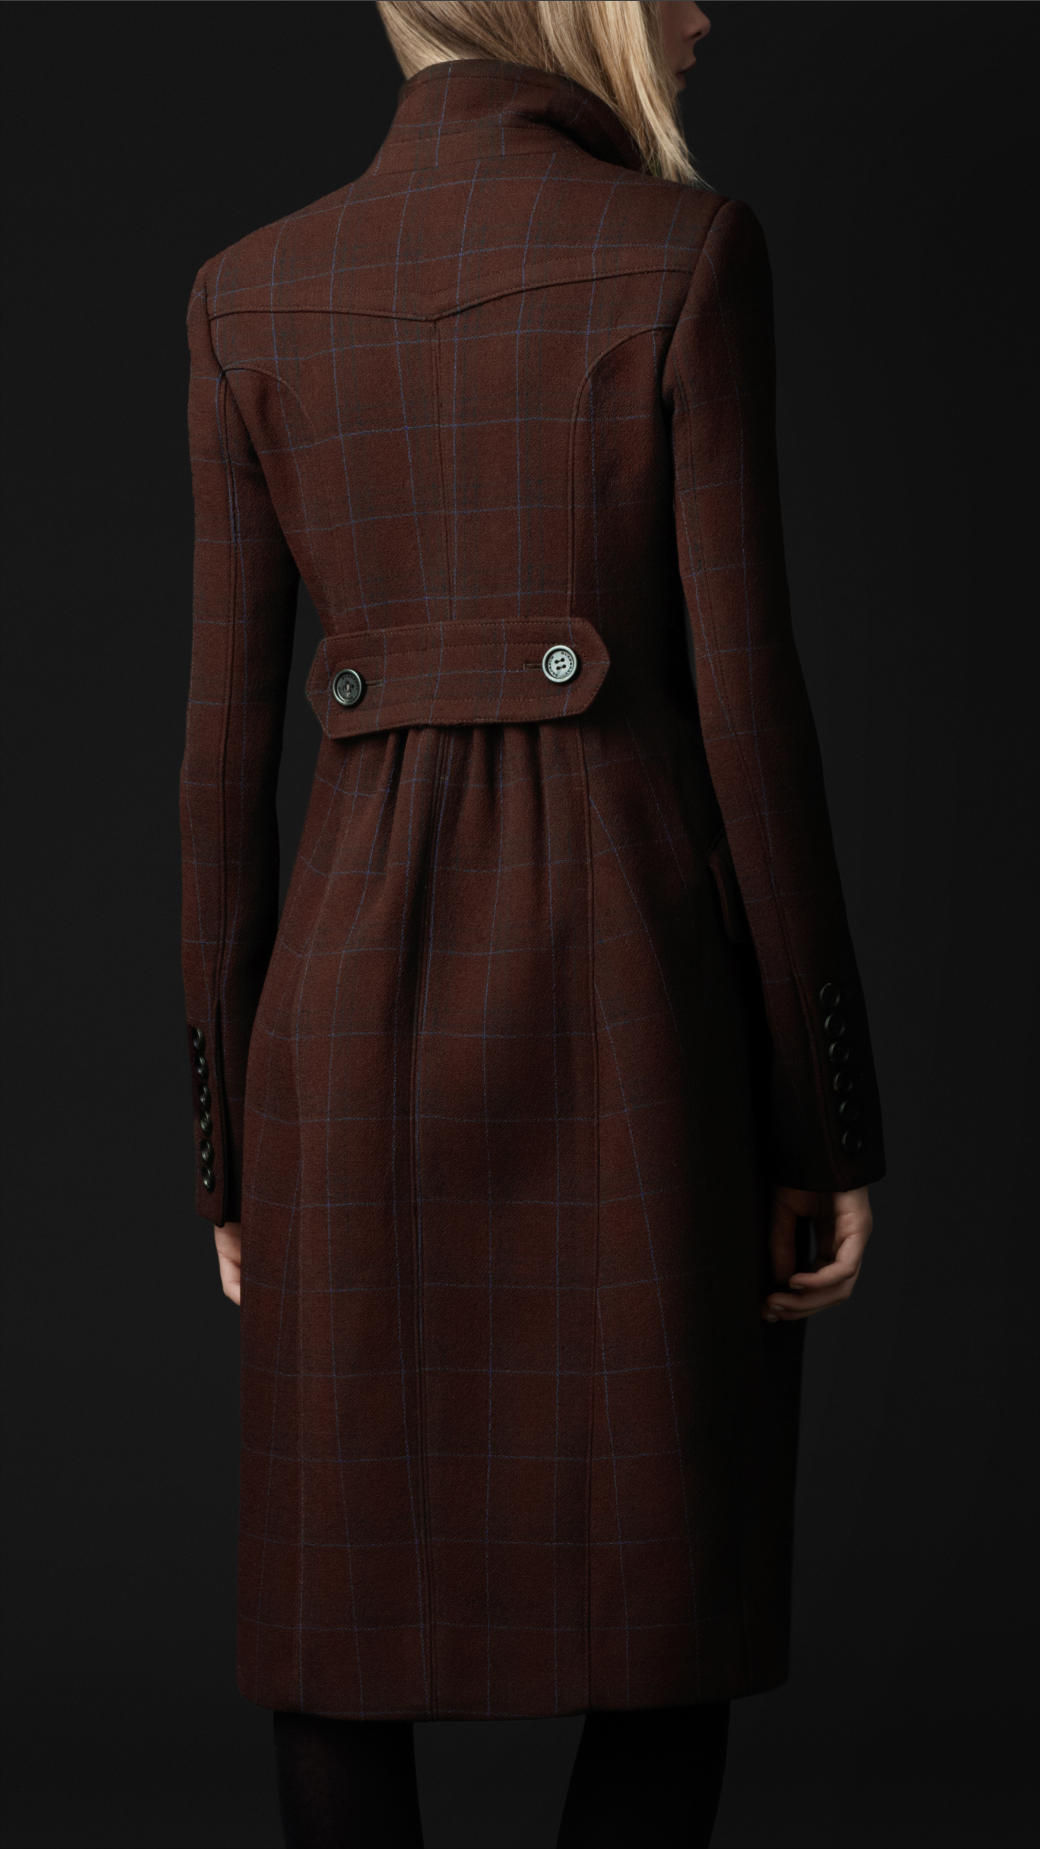 Lyst - Burberry Prorsum Virgin Wool Tailored Top Coat in Brown